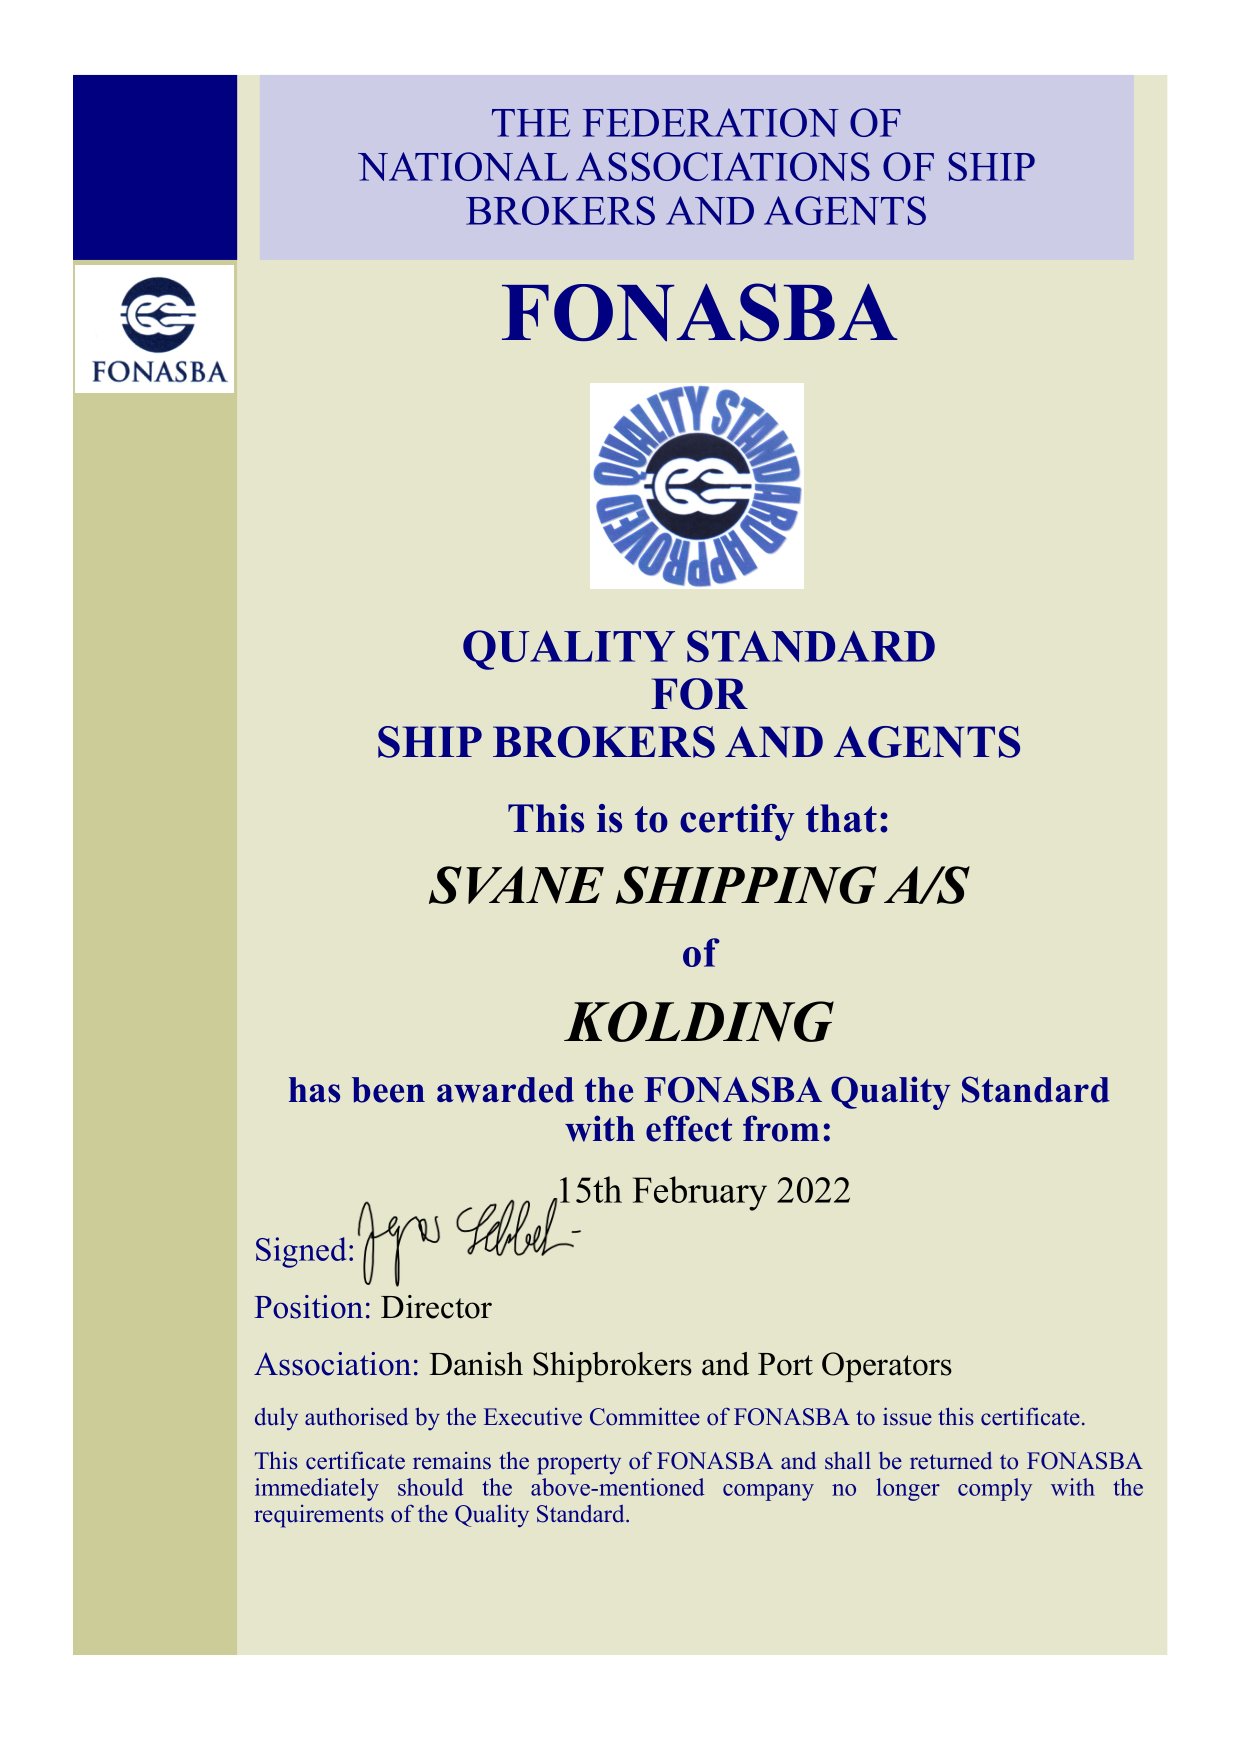 fonasba quality certificate 2022